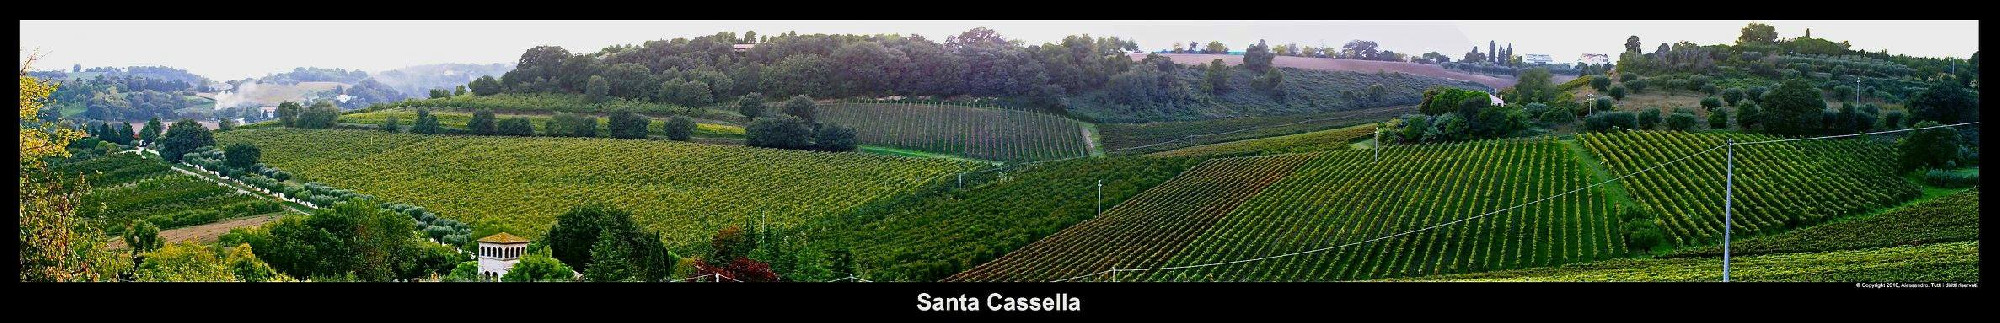 Santa Cassella